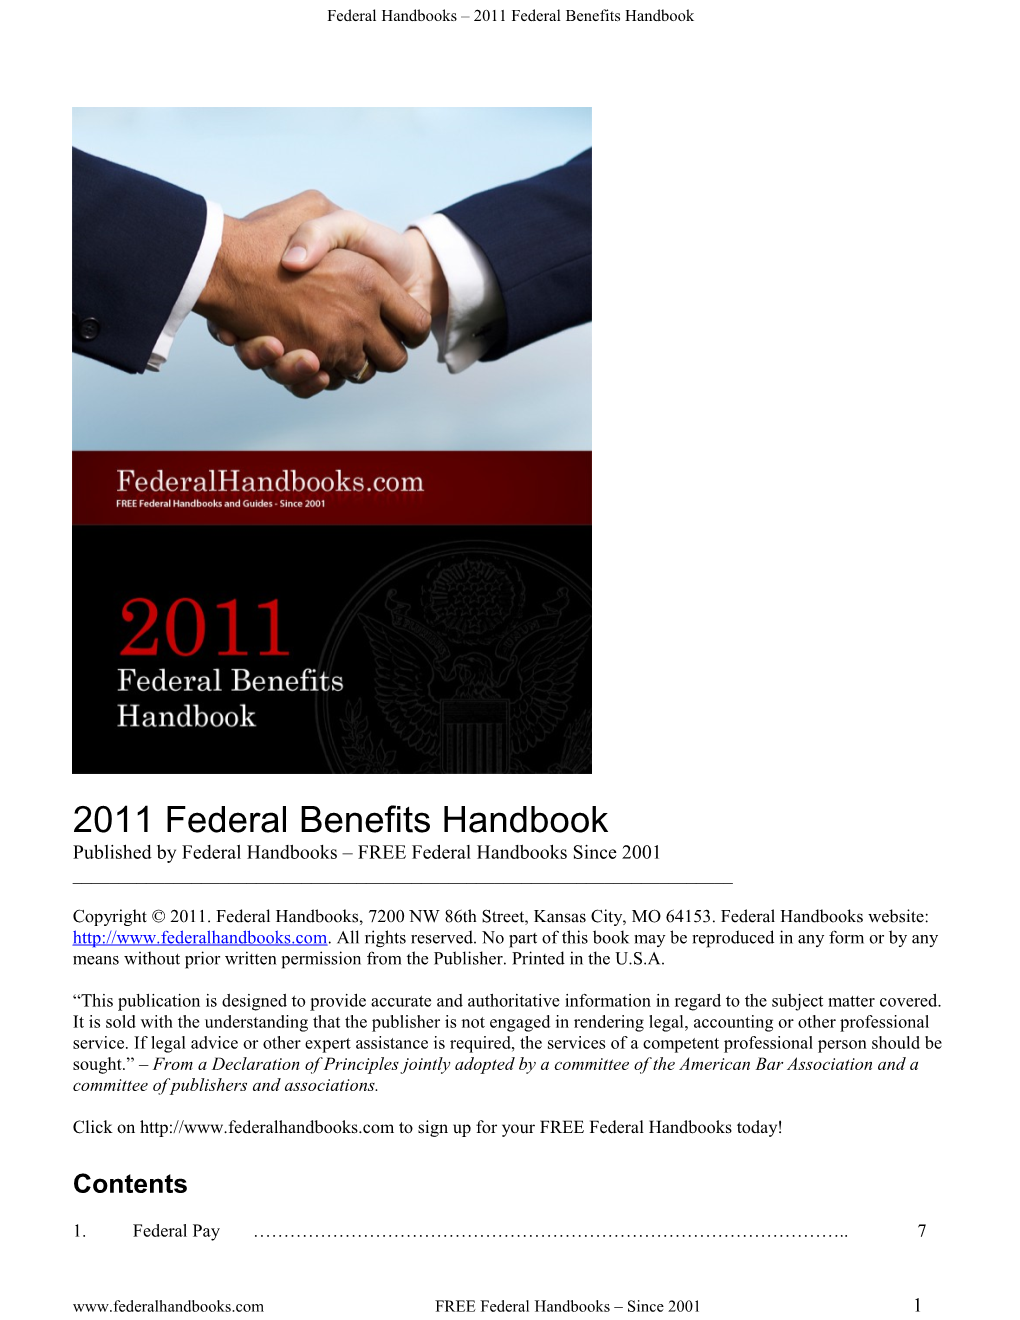 Federal Handbooks 2011 Federal Benefits Handbook